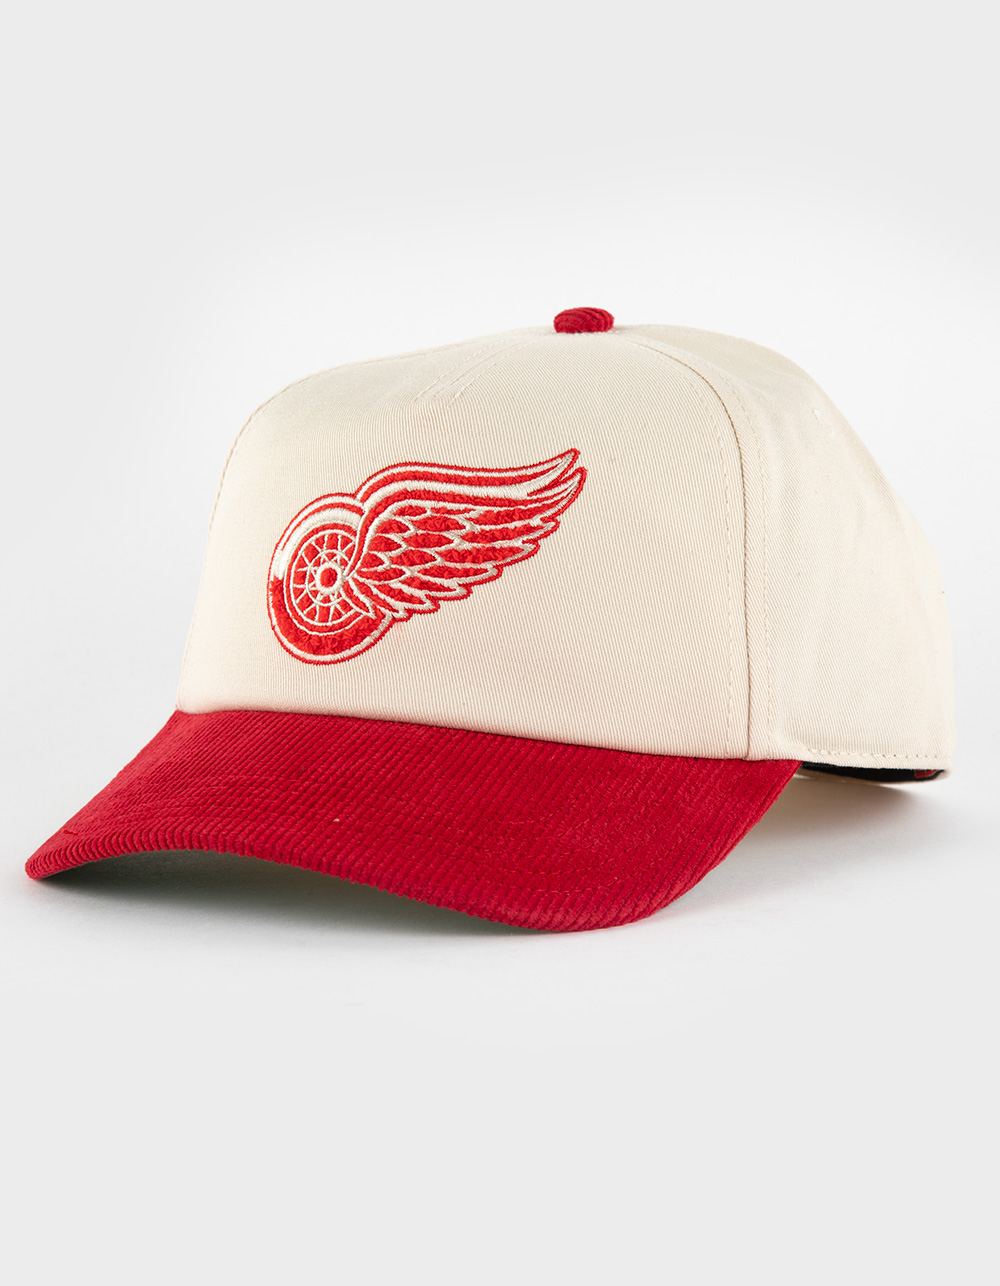 AMERICAN NEEDLE Detroit Red Wings NHL Mens Snapback Hat